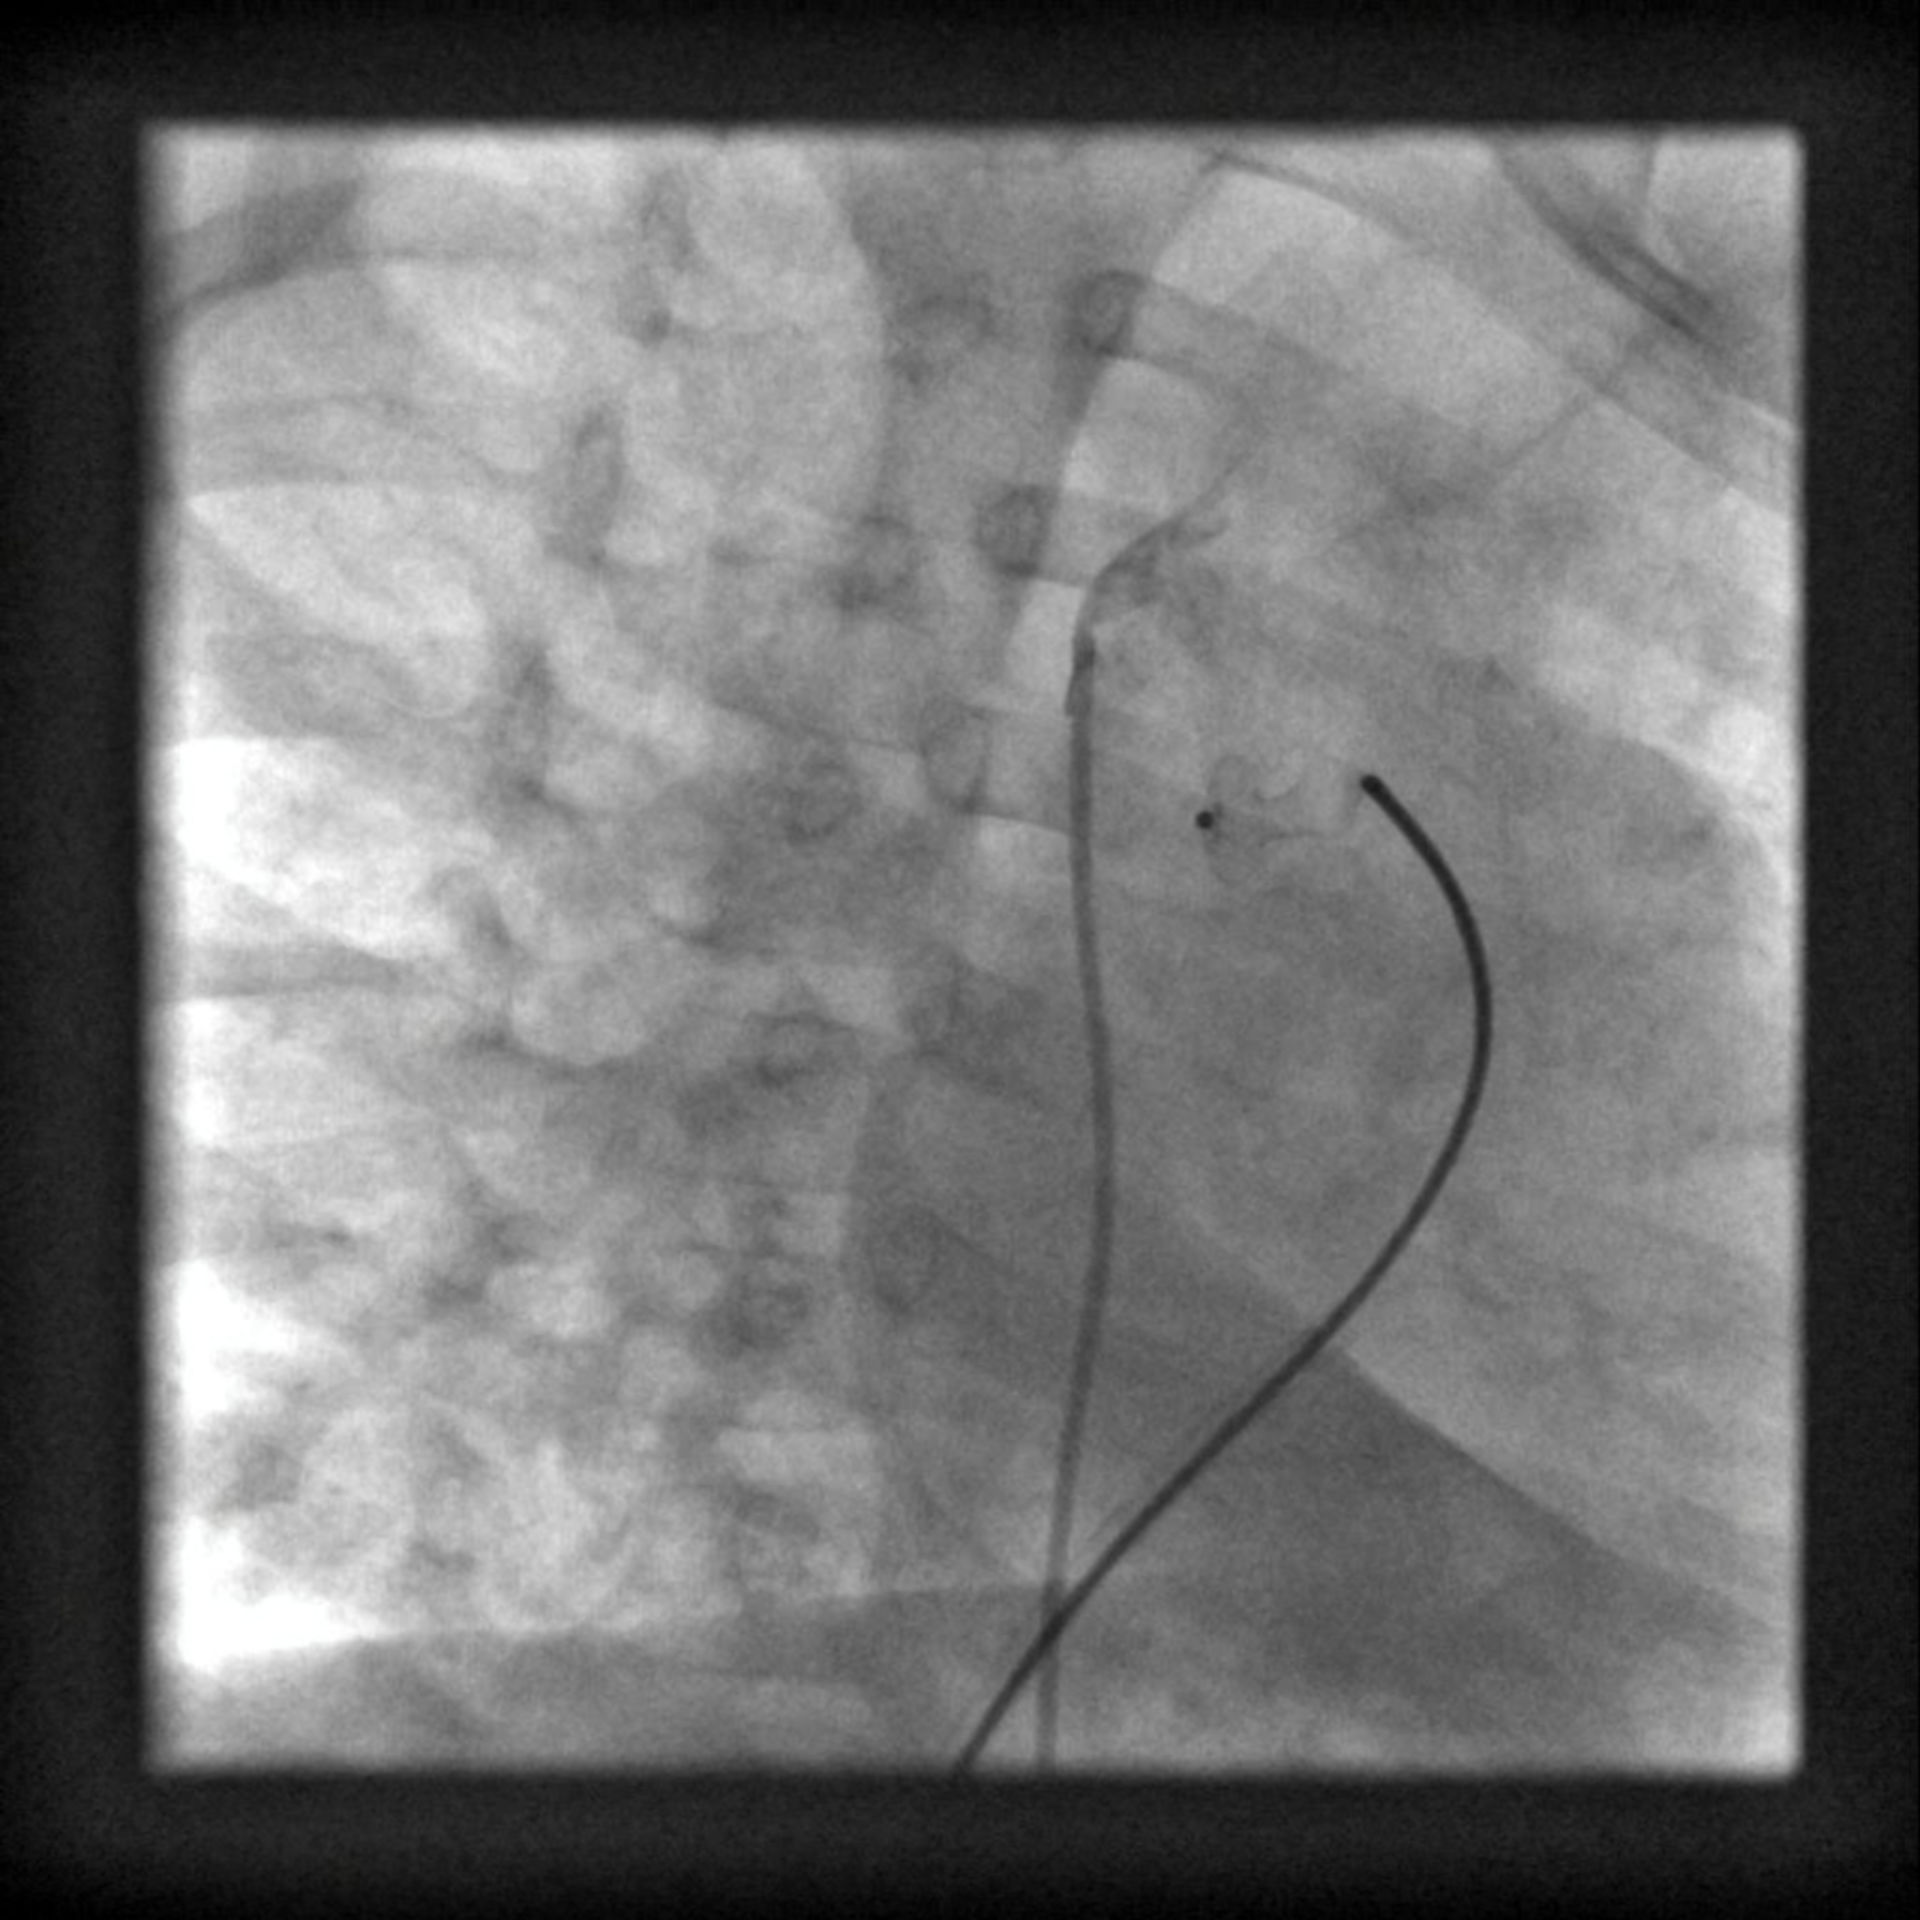 Angiography of the coronary arteries